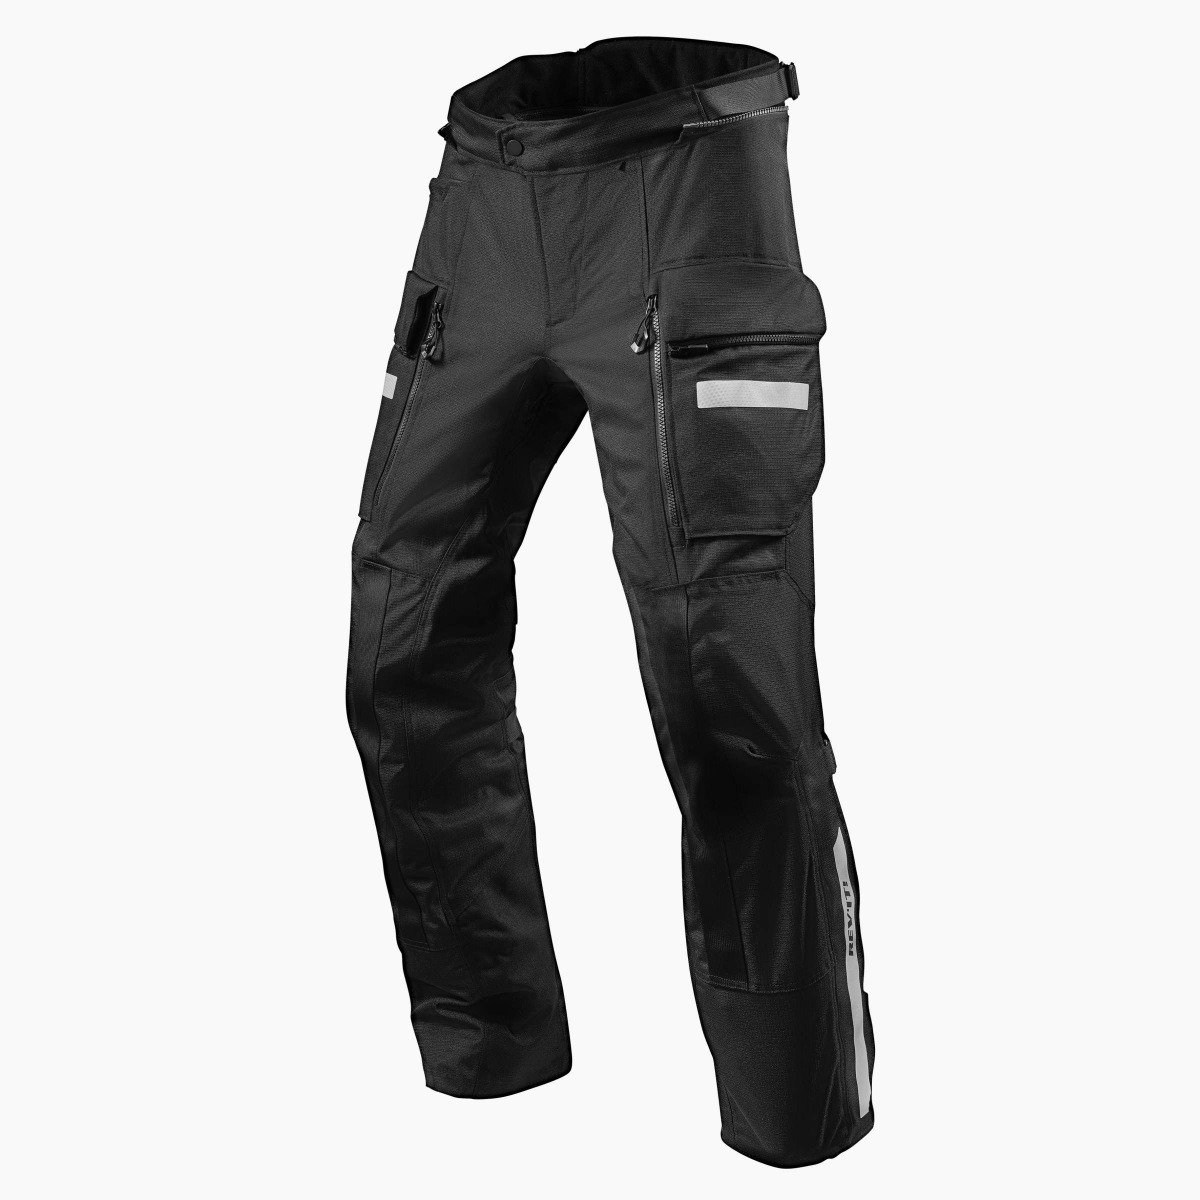 Image of REV'IT! Sand 4 H2O Short Black Motorcycle Pants Size S EN